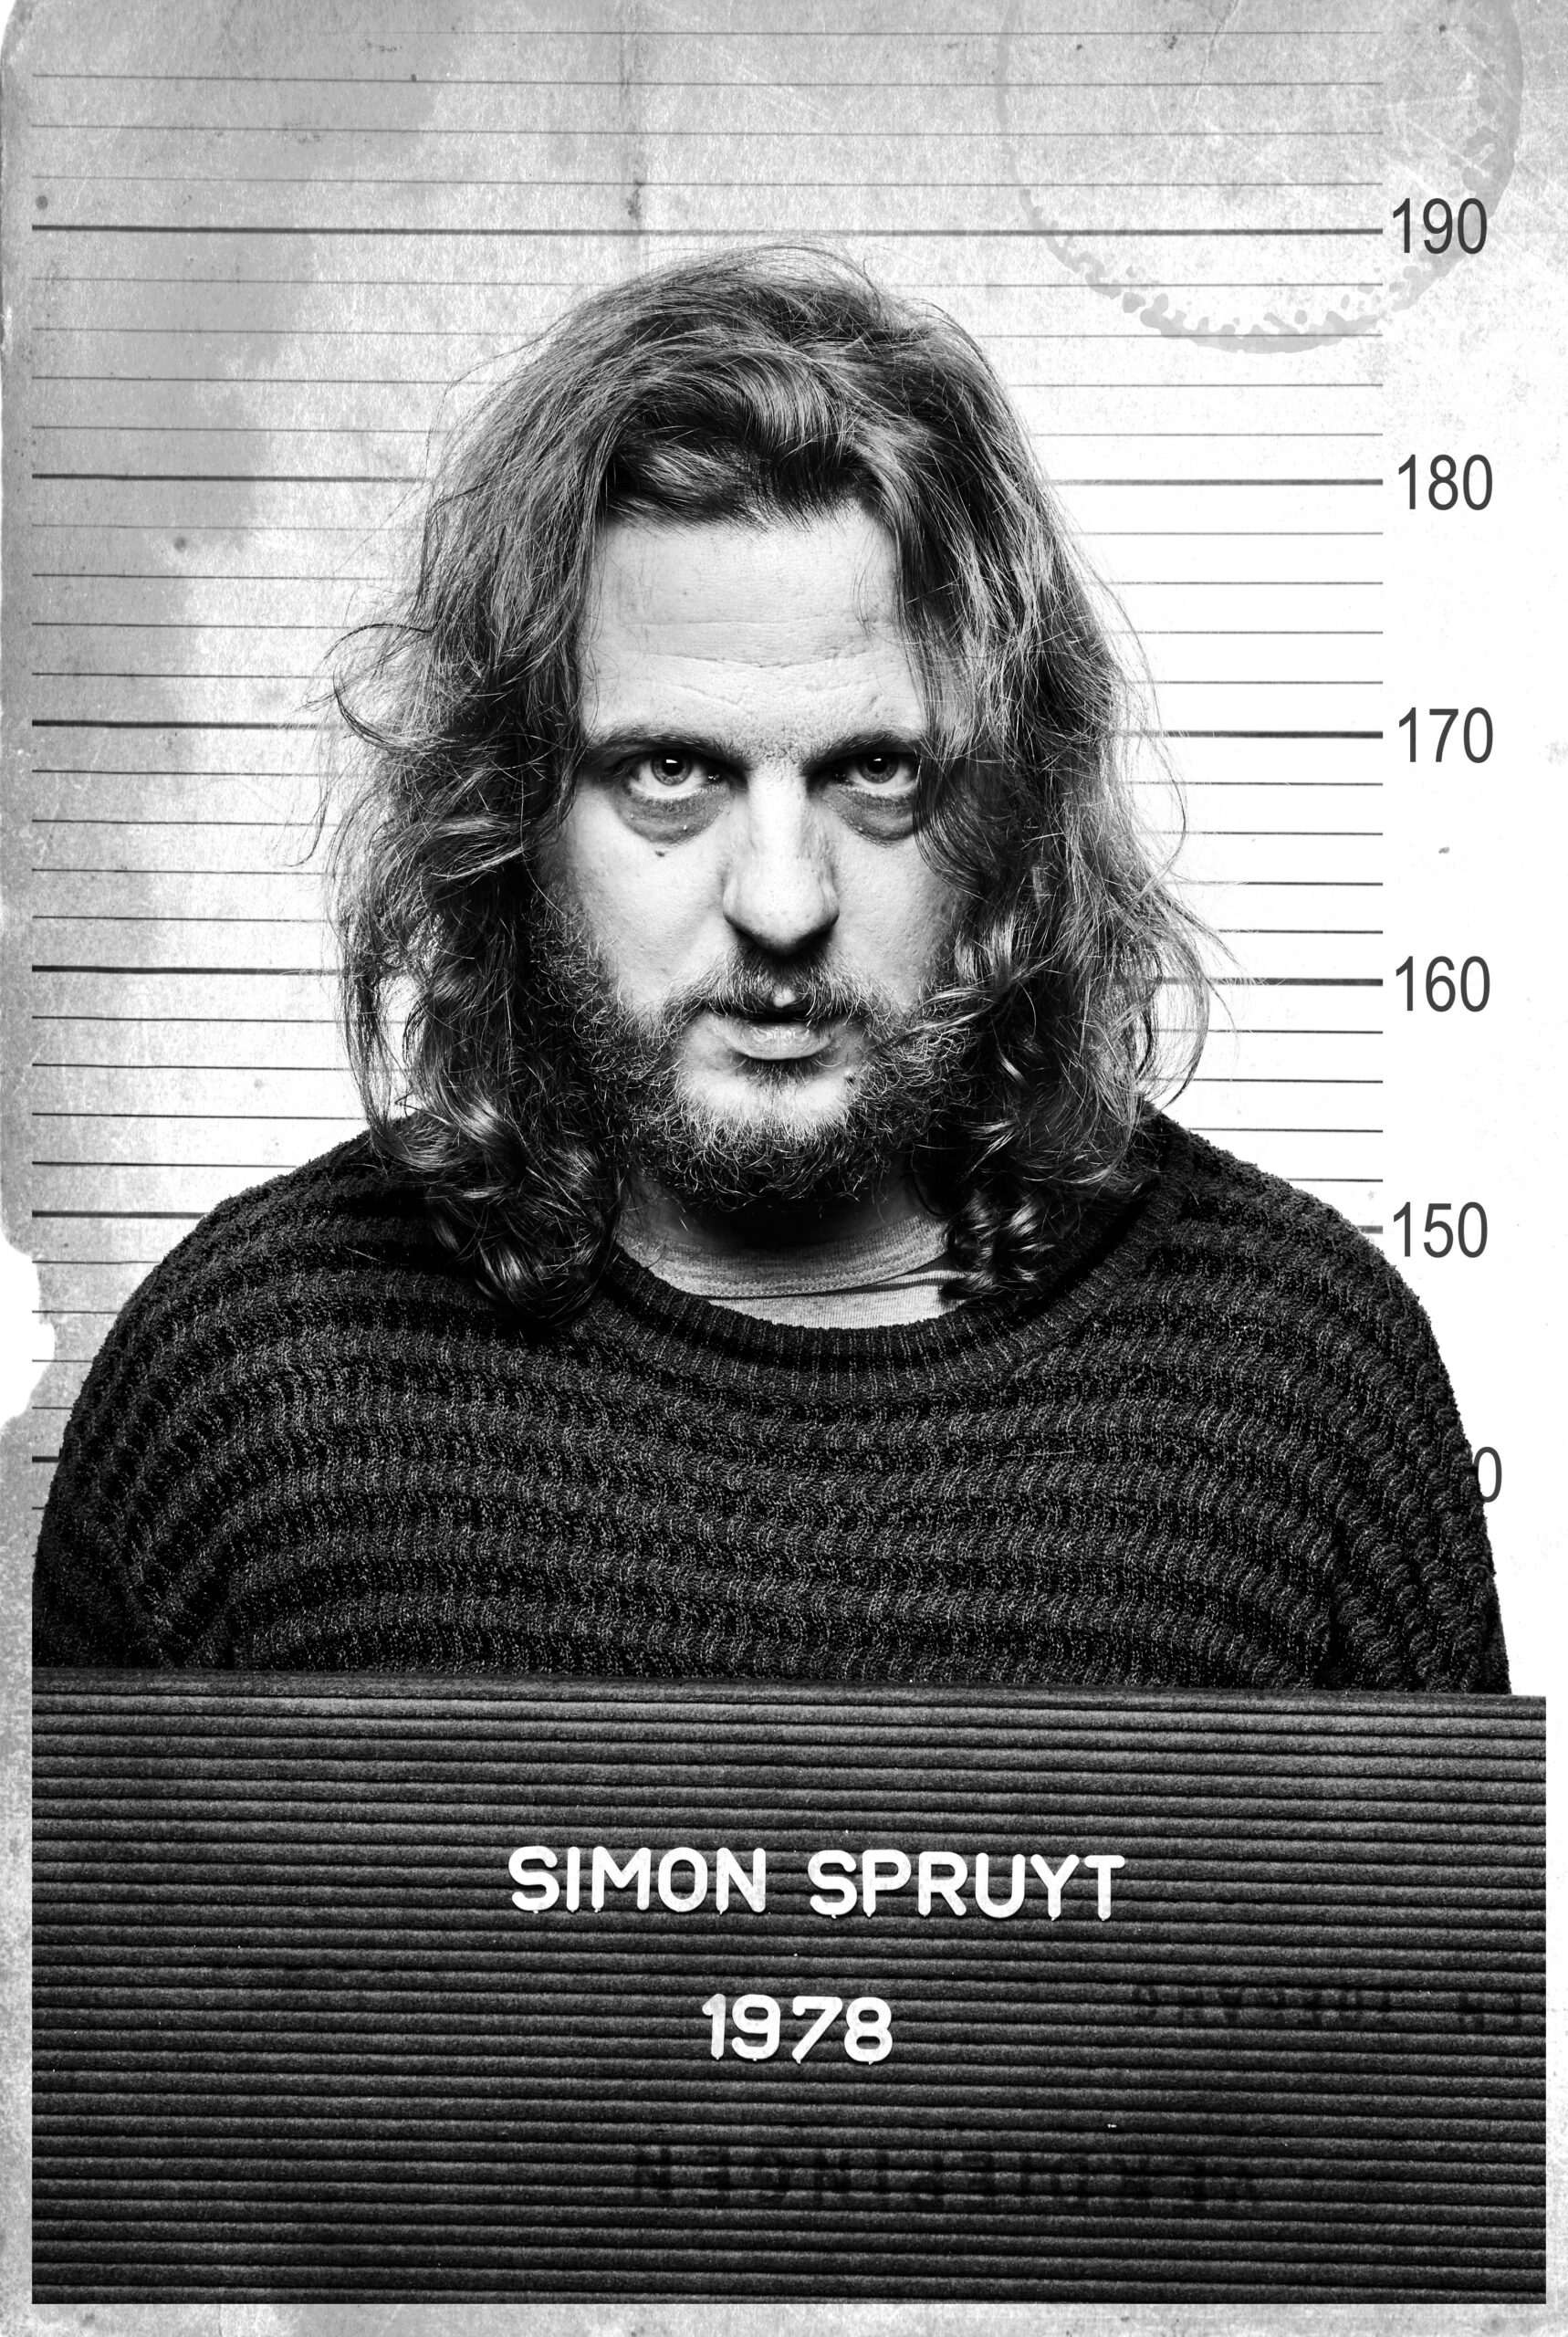 Simon Spruyt